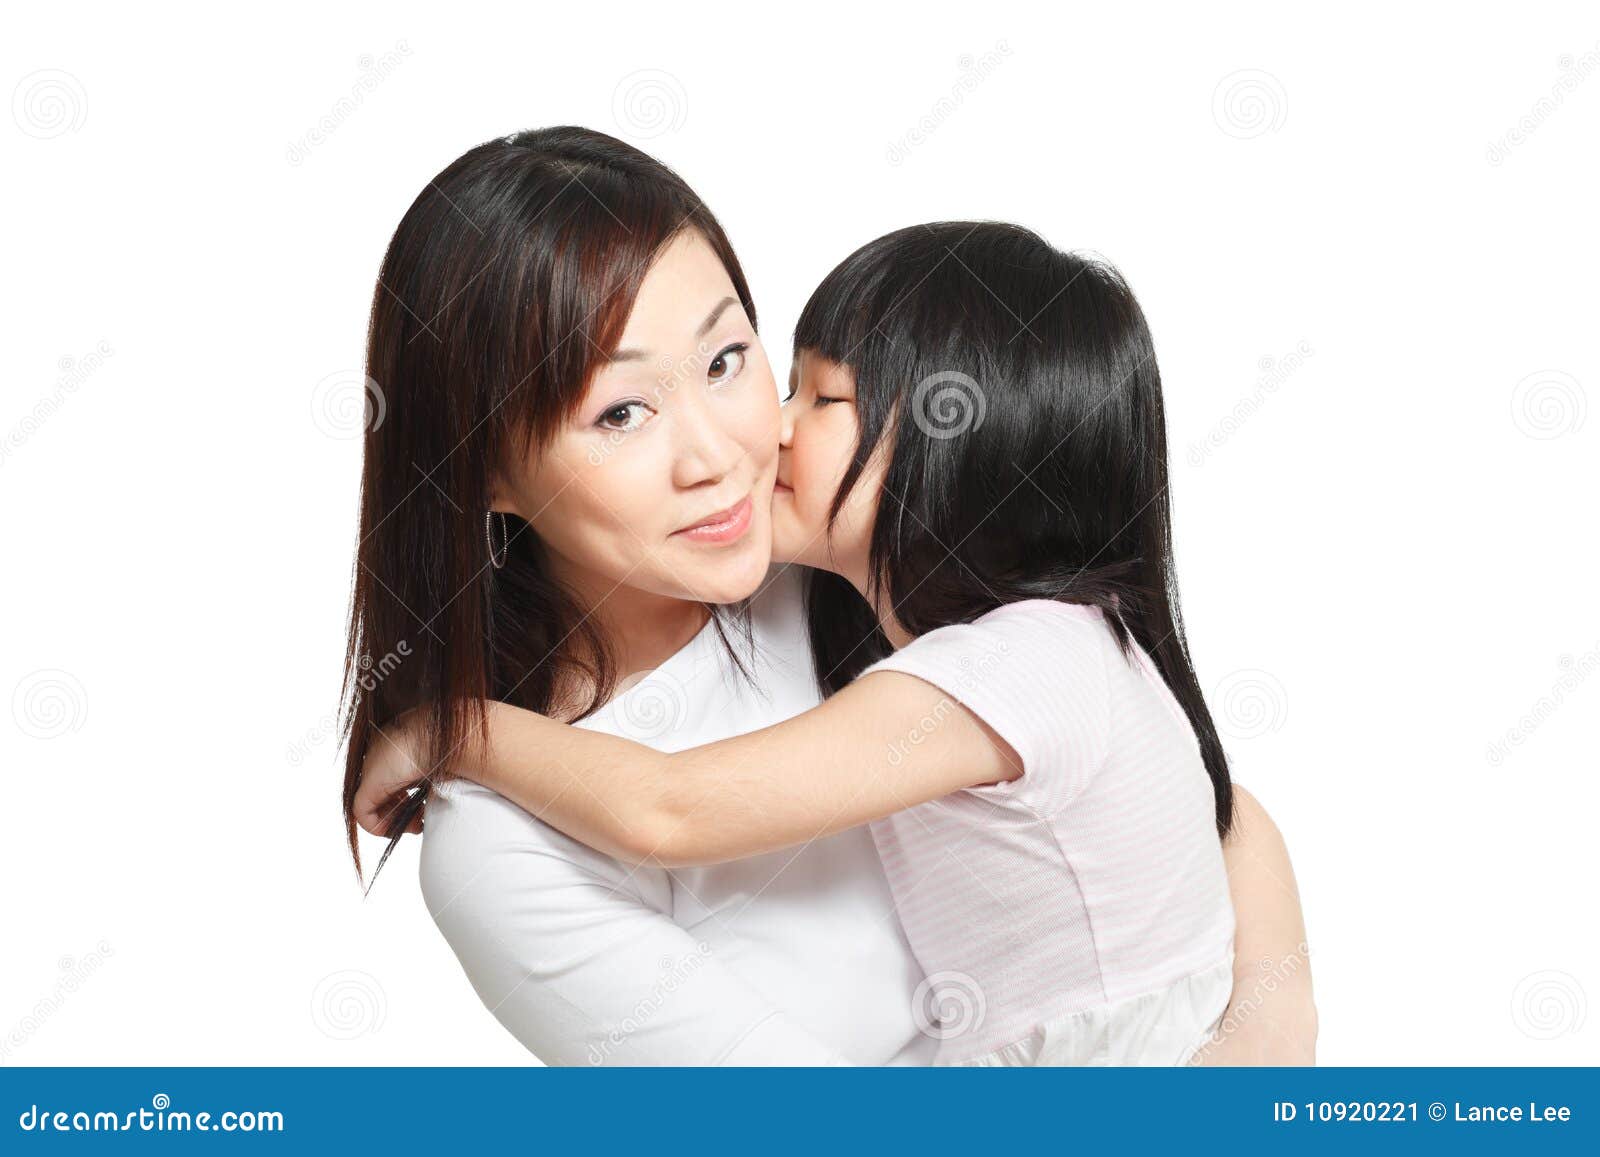 Asian girls kissing thumbs